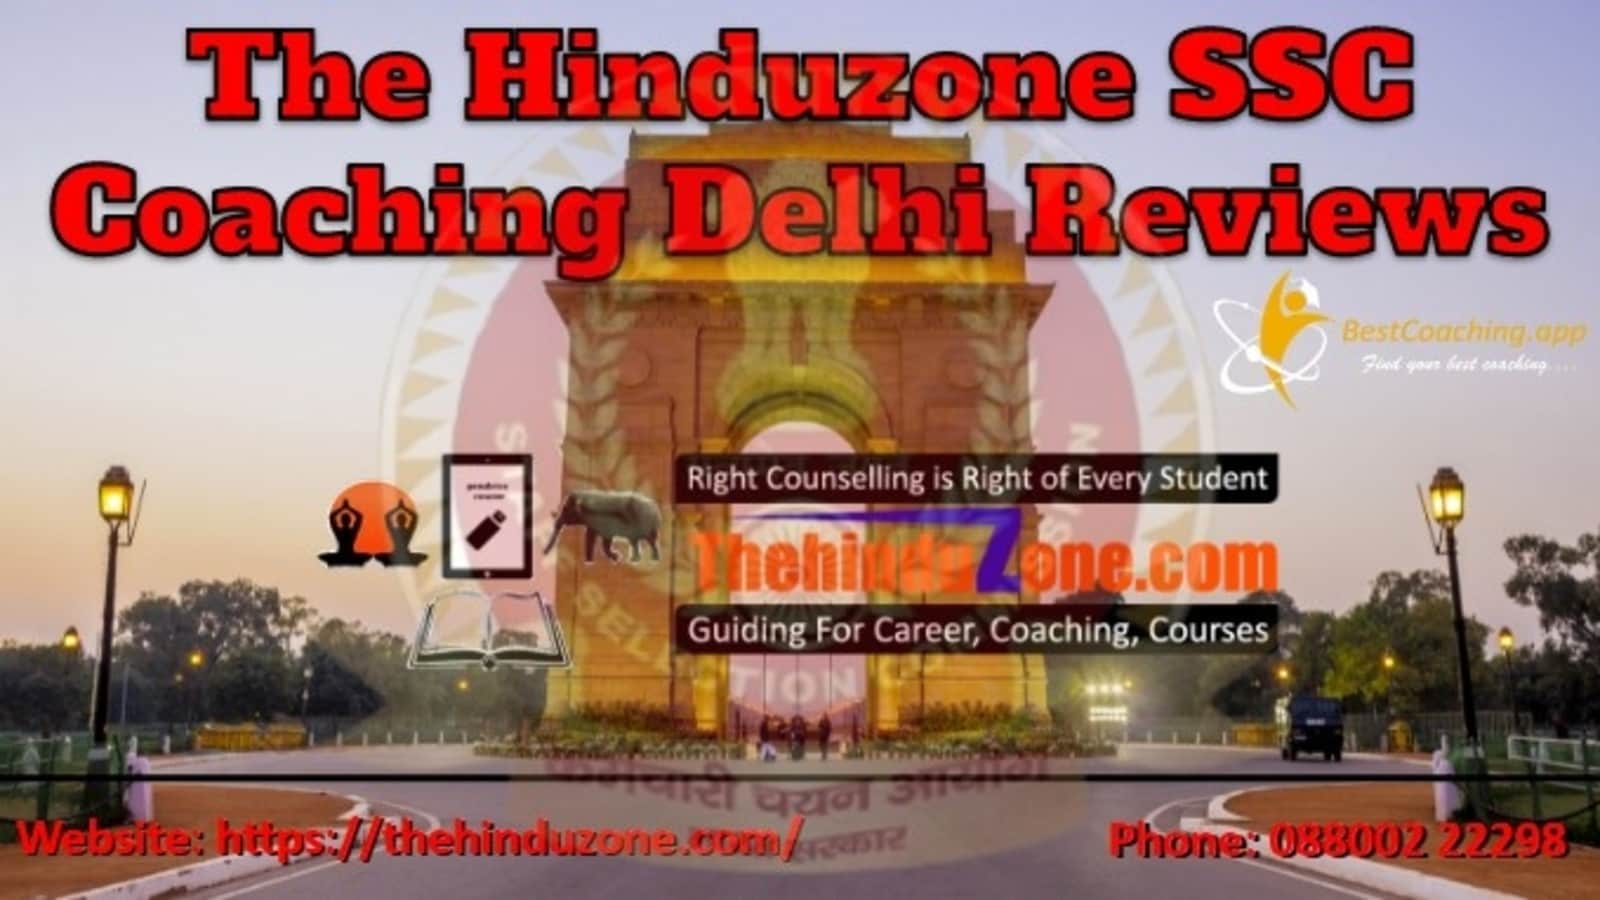 The Hinduzone SSC Coaching in Delhi